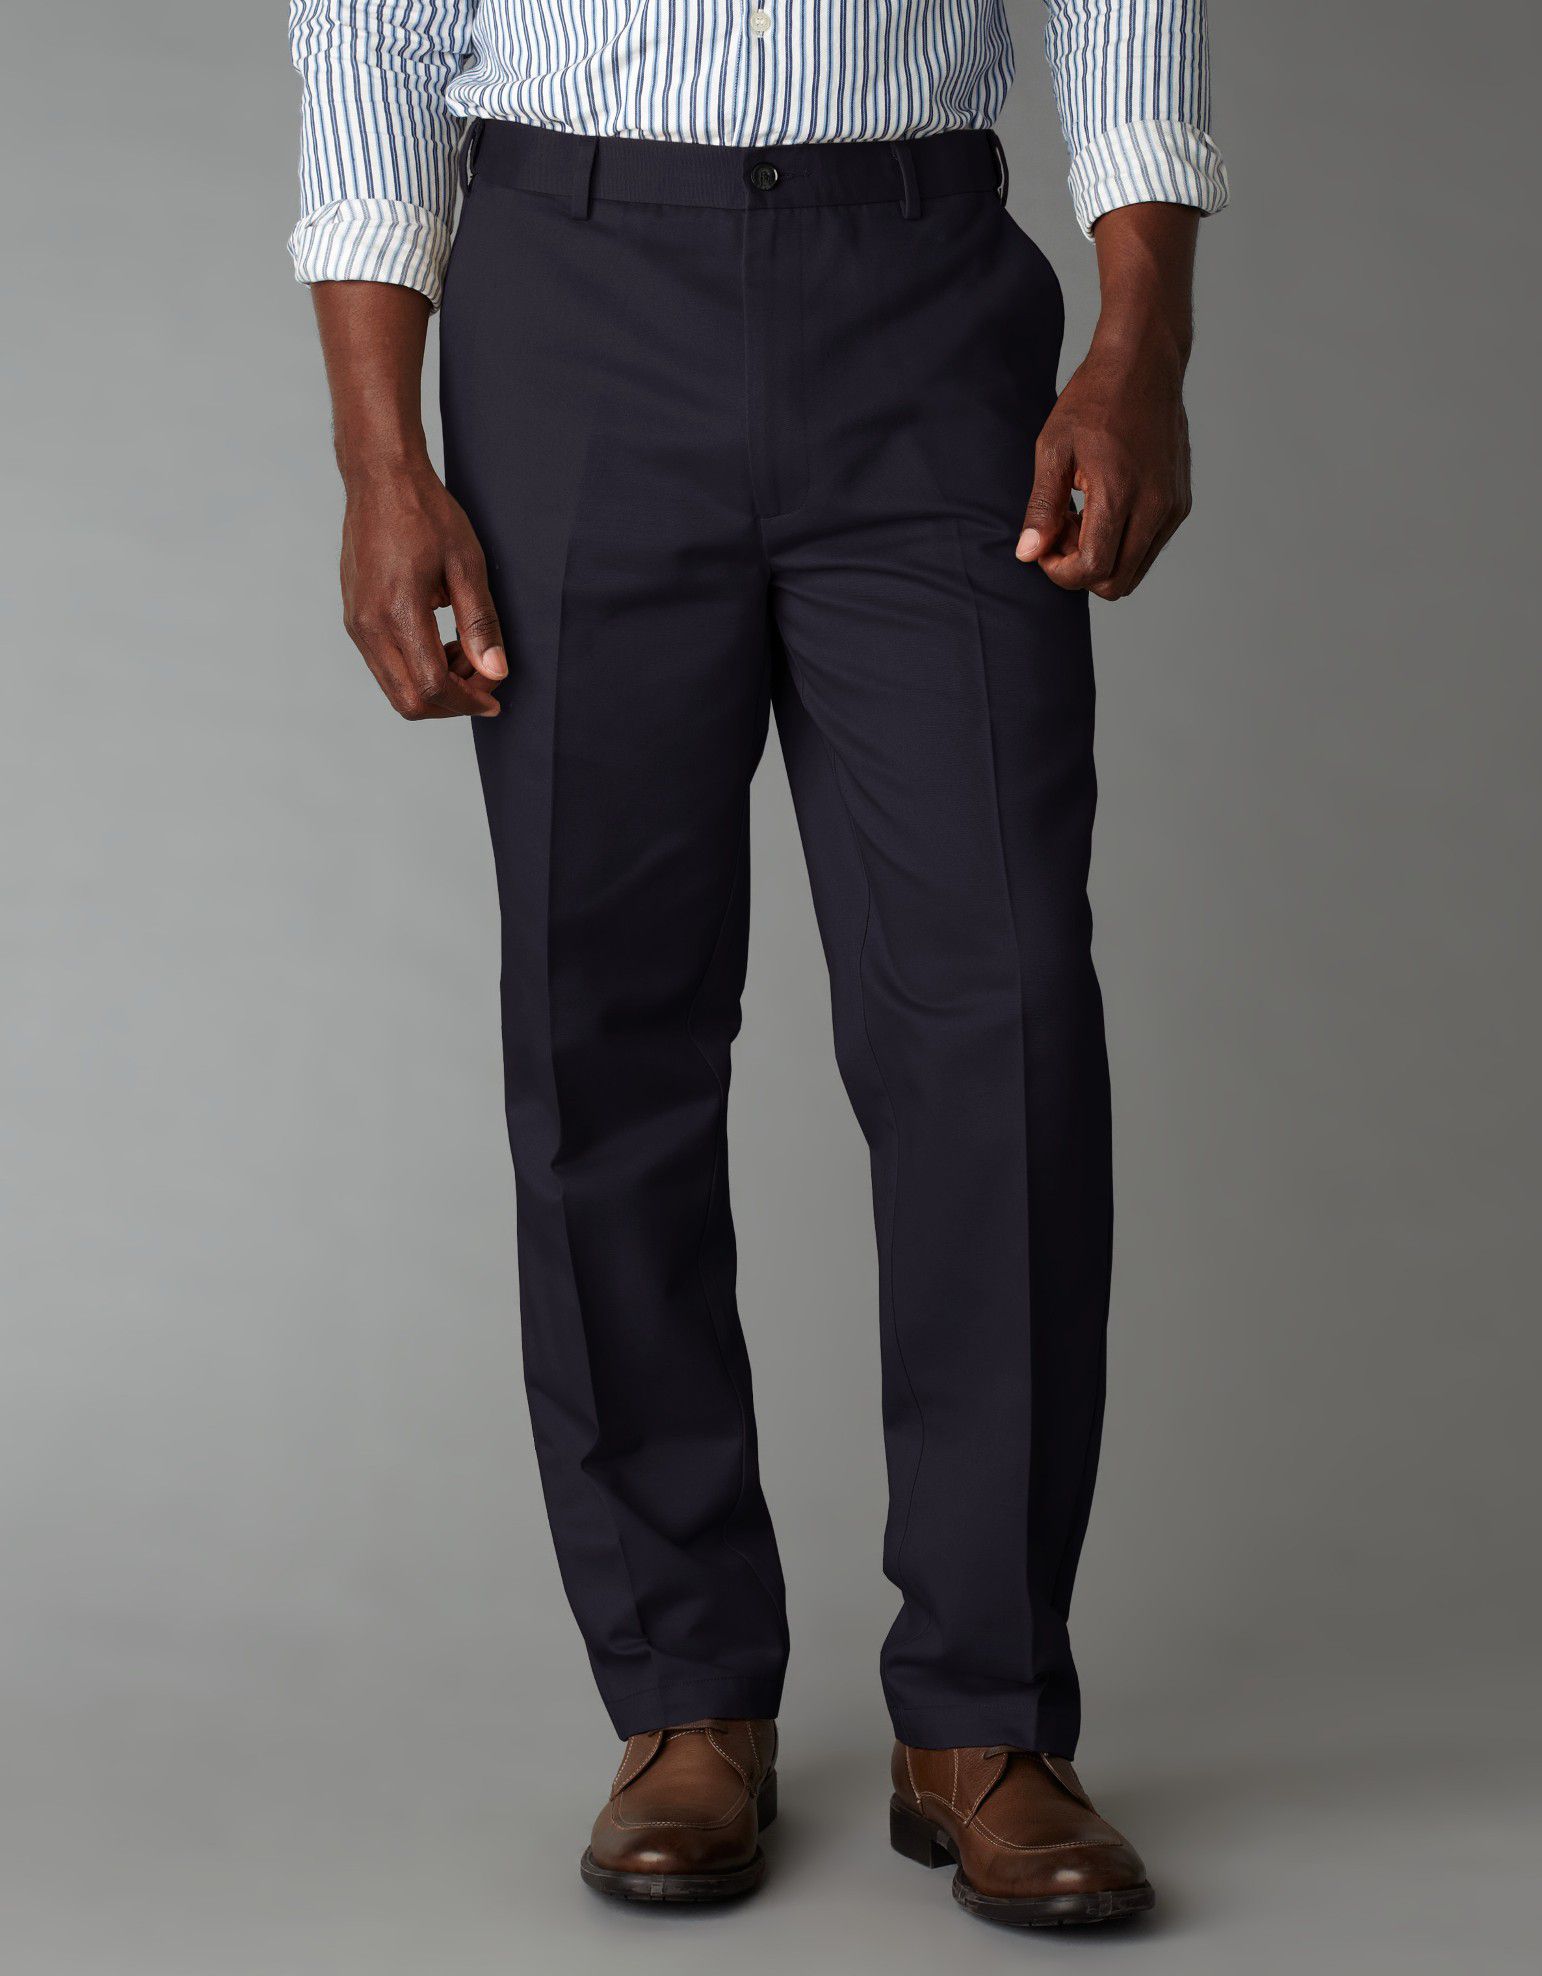 Dockers Men's Comfort Waist Khaki D3 Classic Flat Front Pants